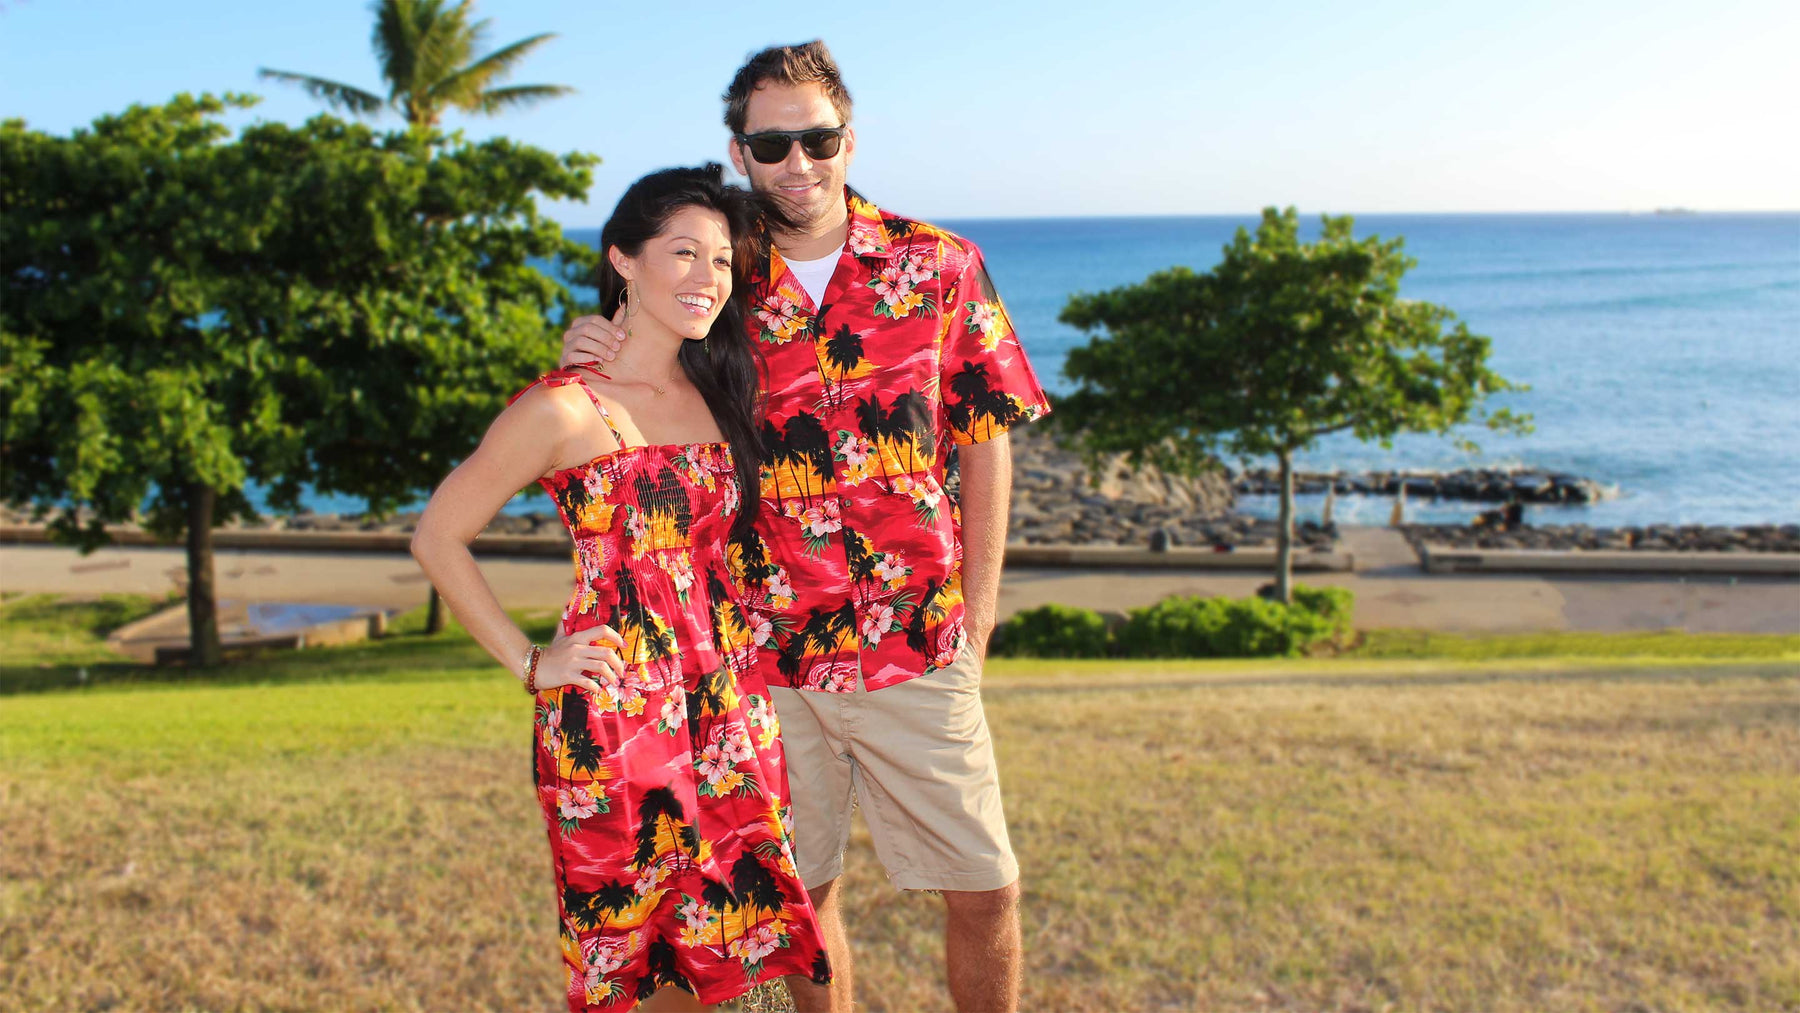 hawaiian outfit for women